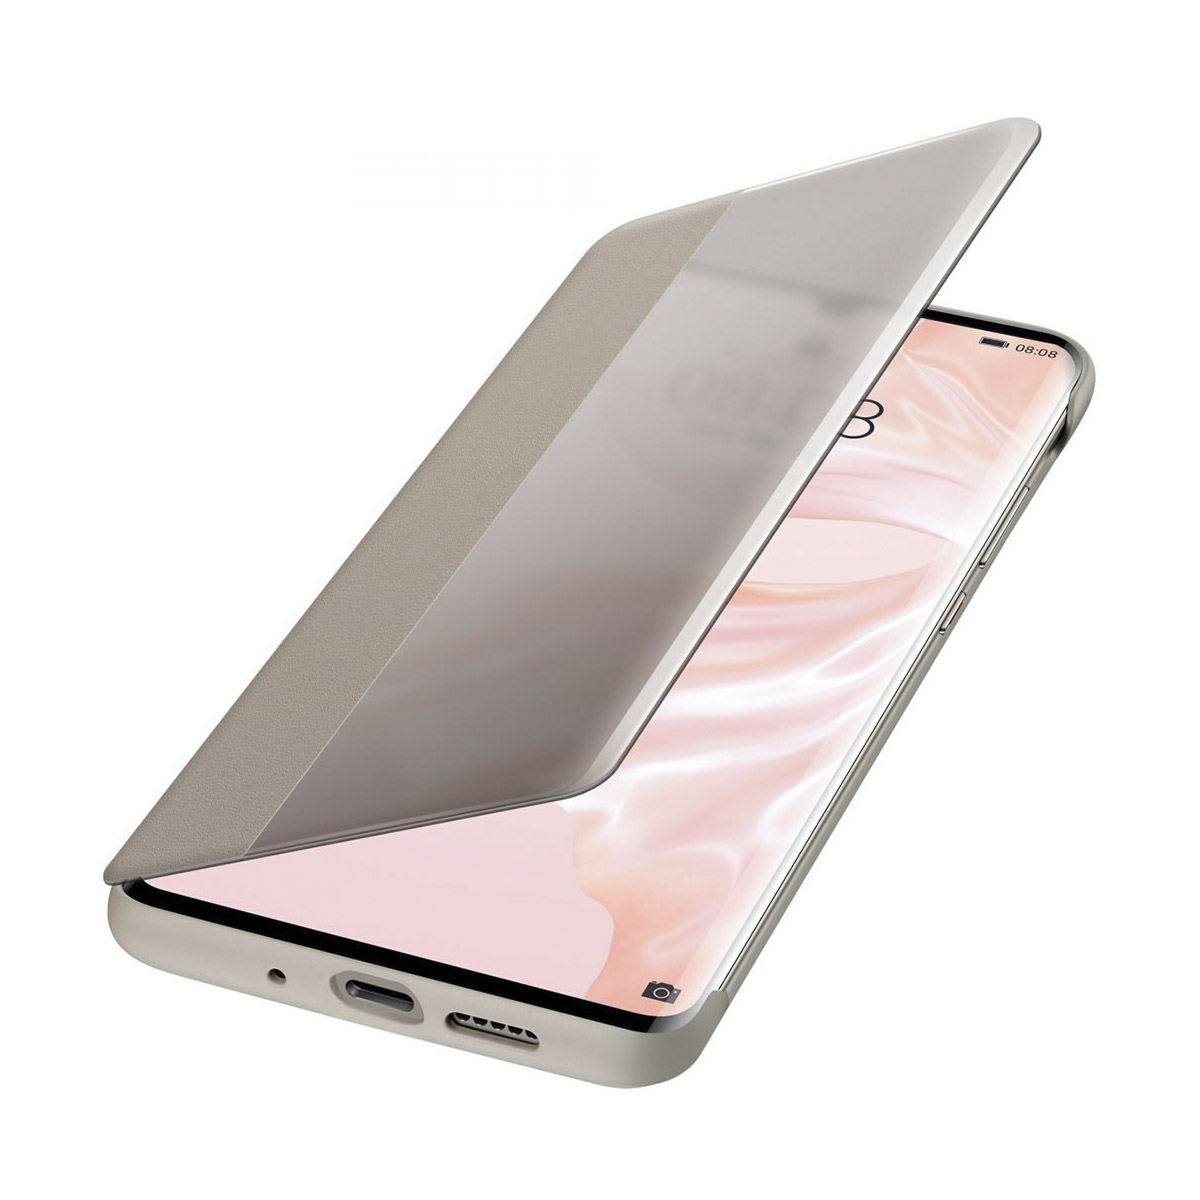 Чехол для смартфона Huawei P30 Pro Smart View Flip Cover, хаки - фото 3